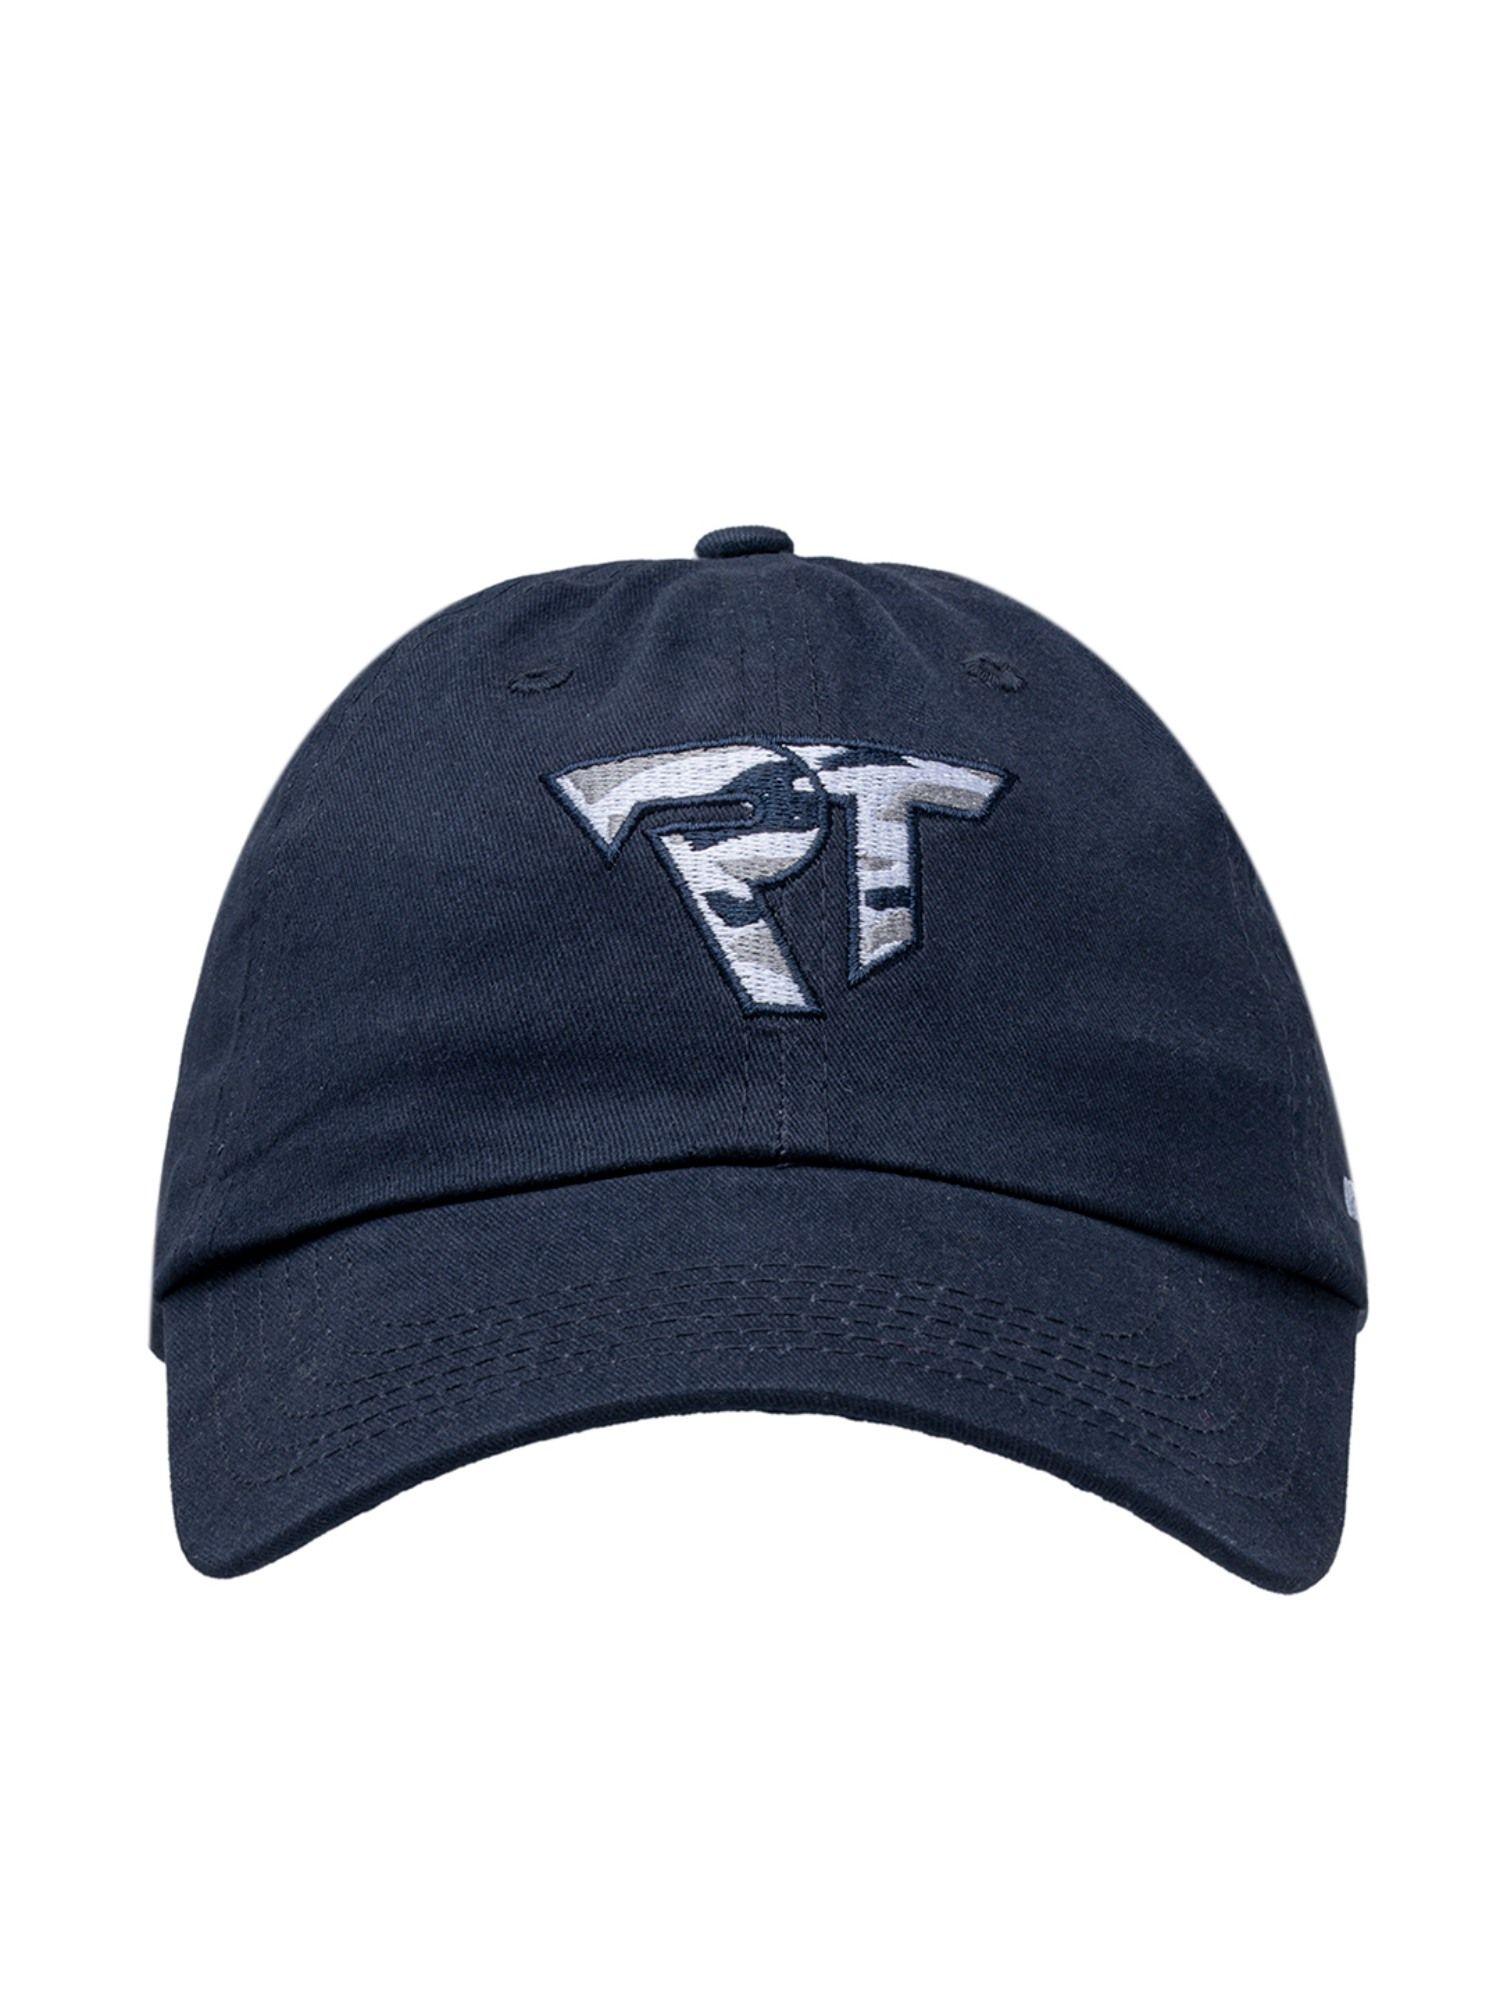 men navy blue free size cap